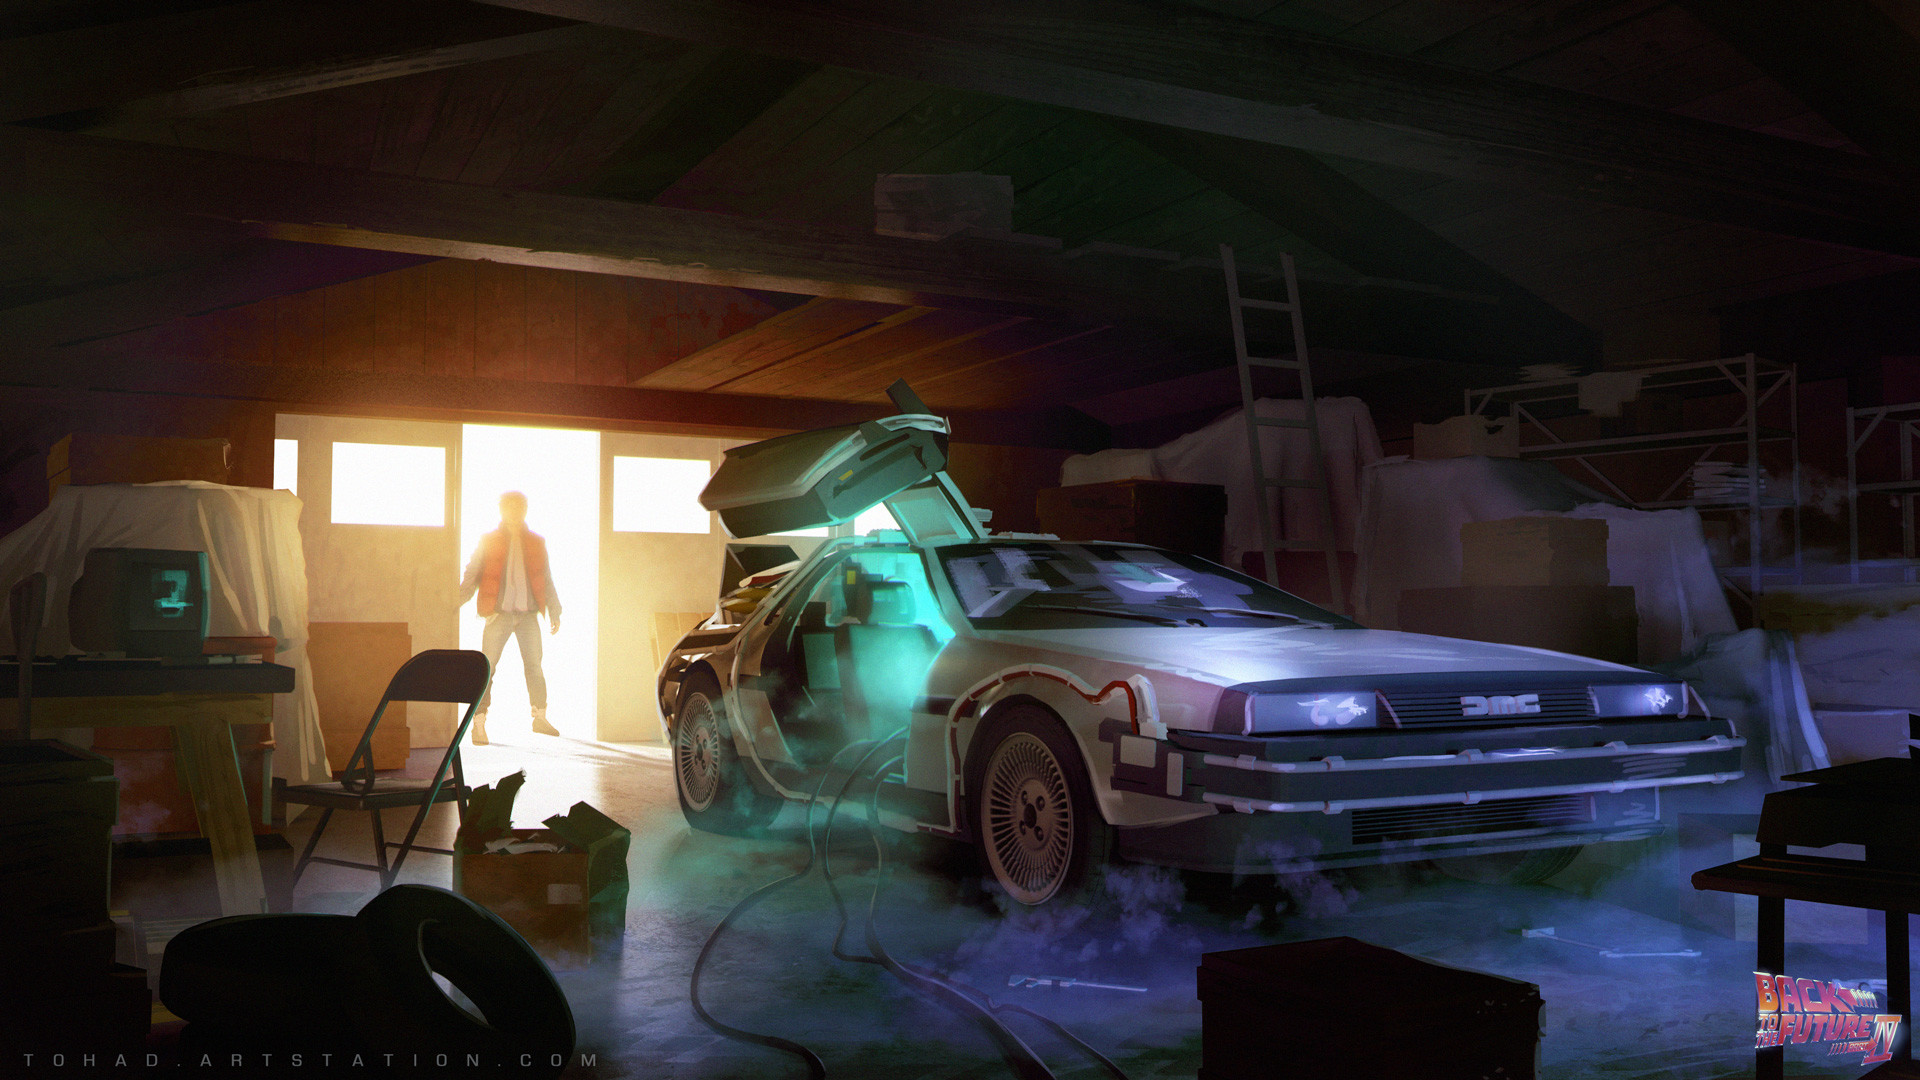 Magic Car Marty McFly DMC DeLorean Back To The Future Sylvain Sarrailh 1920x1080